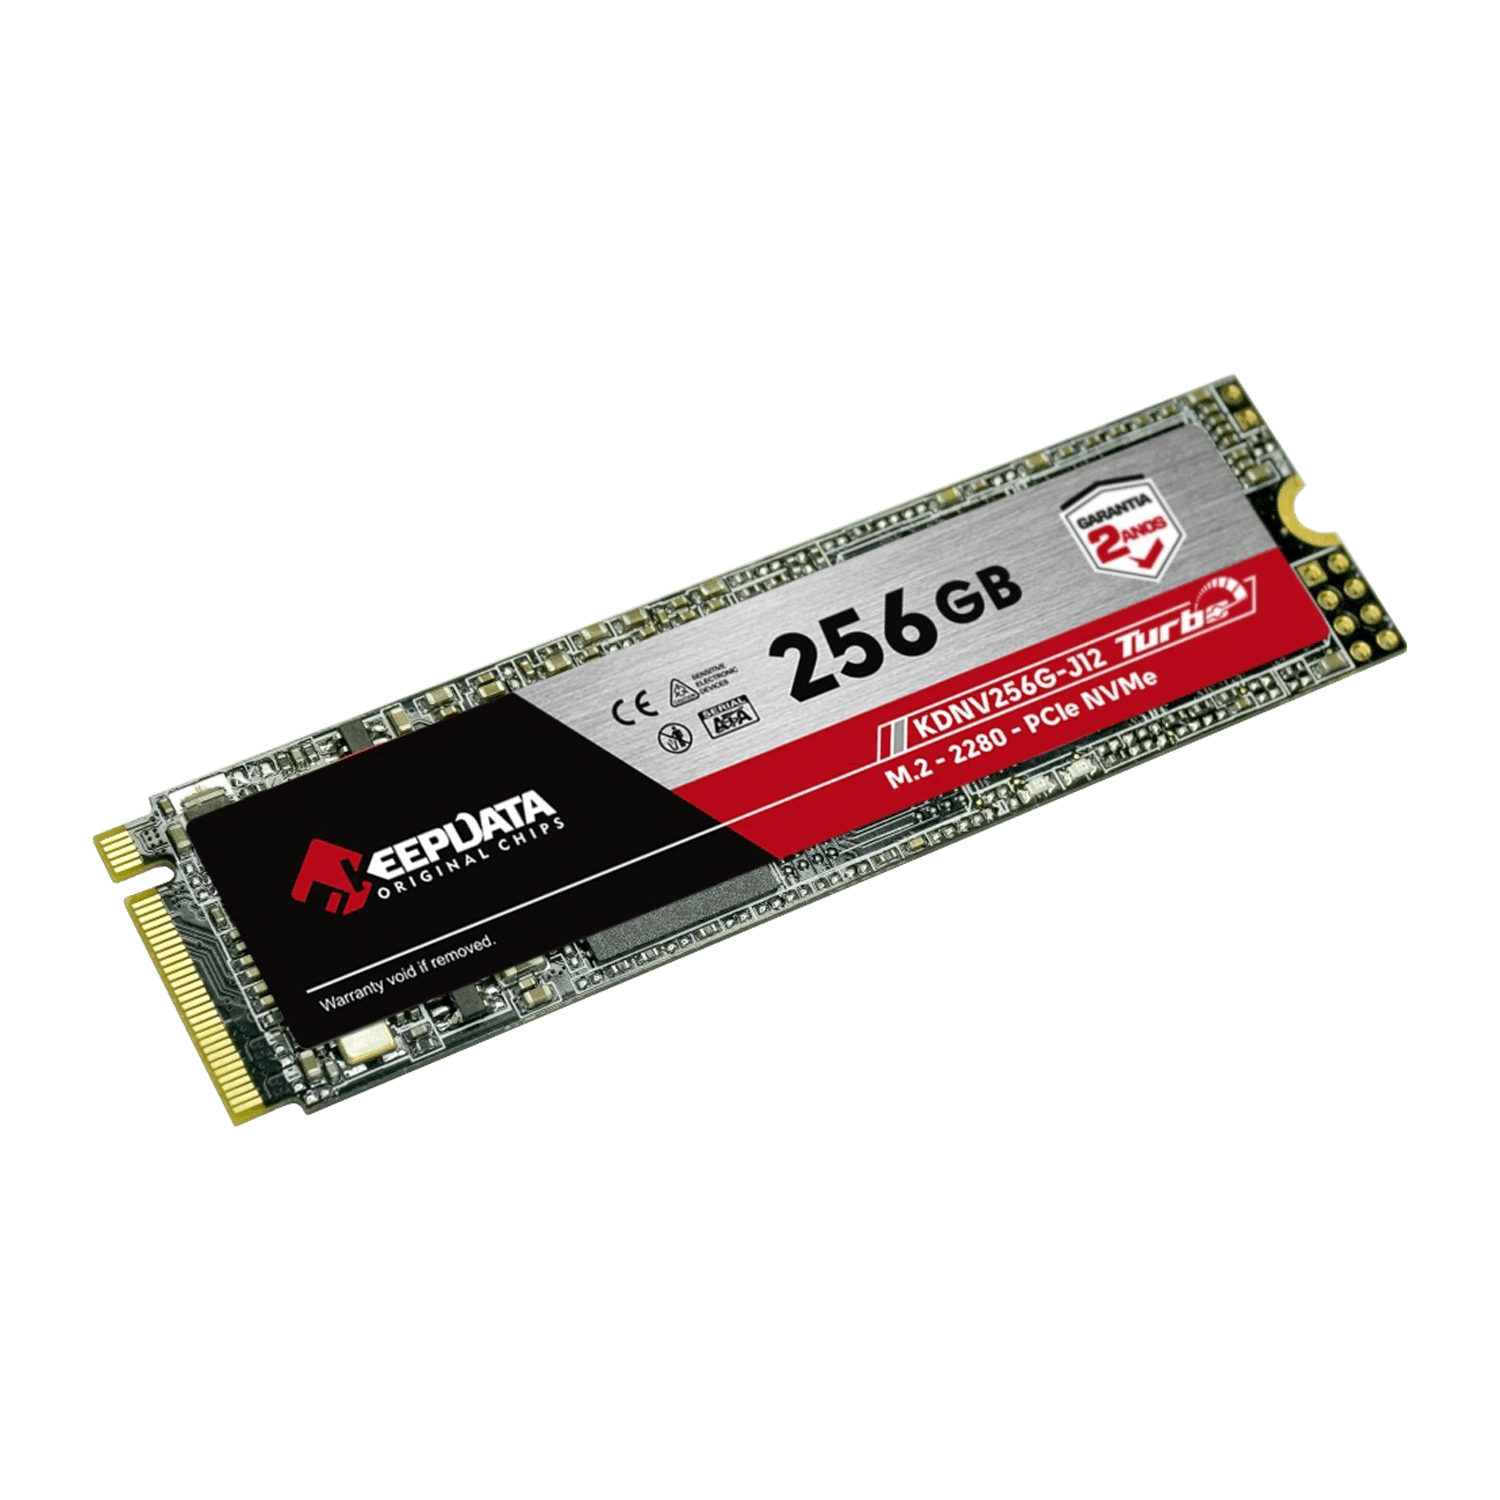 SSD M.2 Keepdata 256GB NVMe PCIe 3.0 - KDNV256G-J12